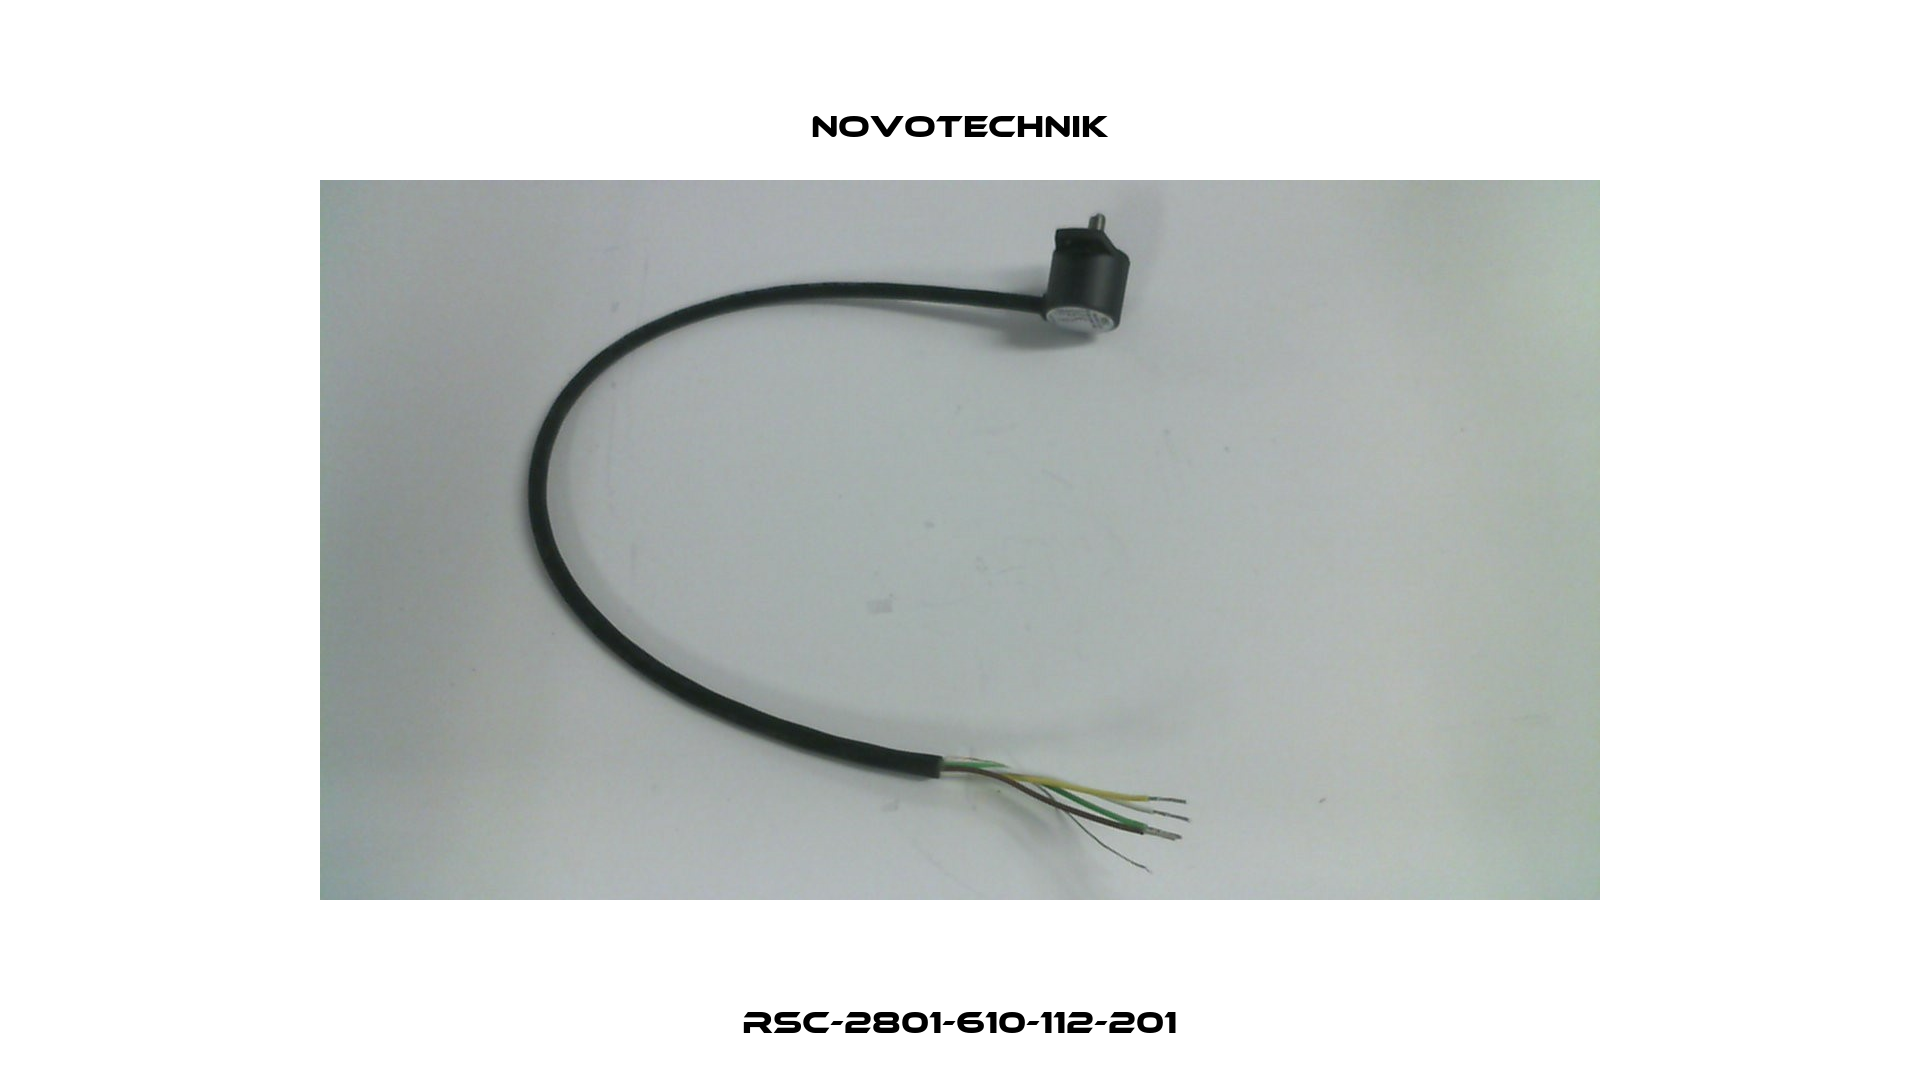 RSC-2801-610-112-201 Novotechnik